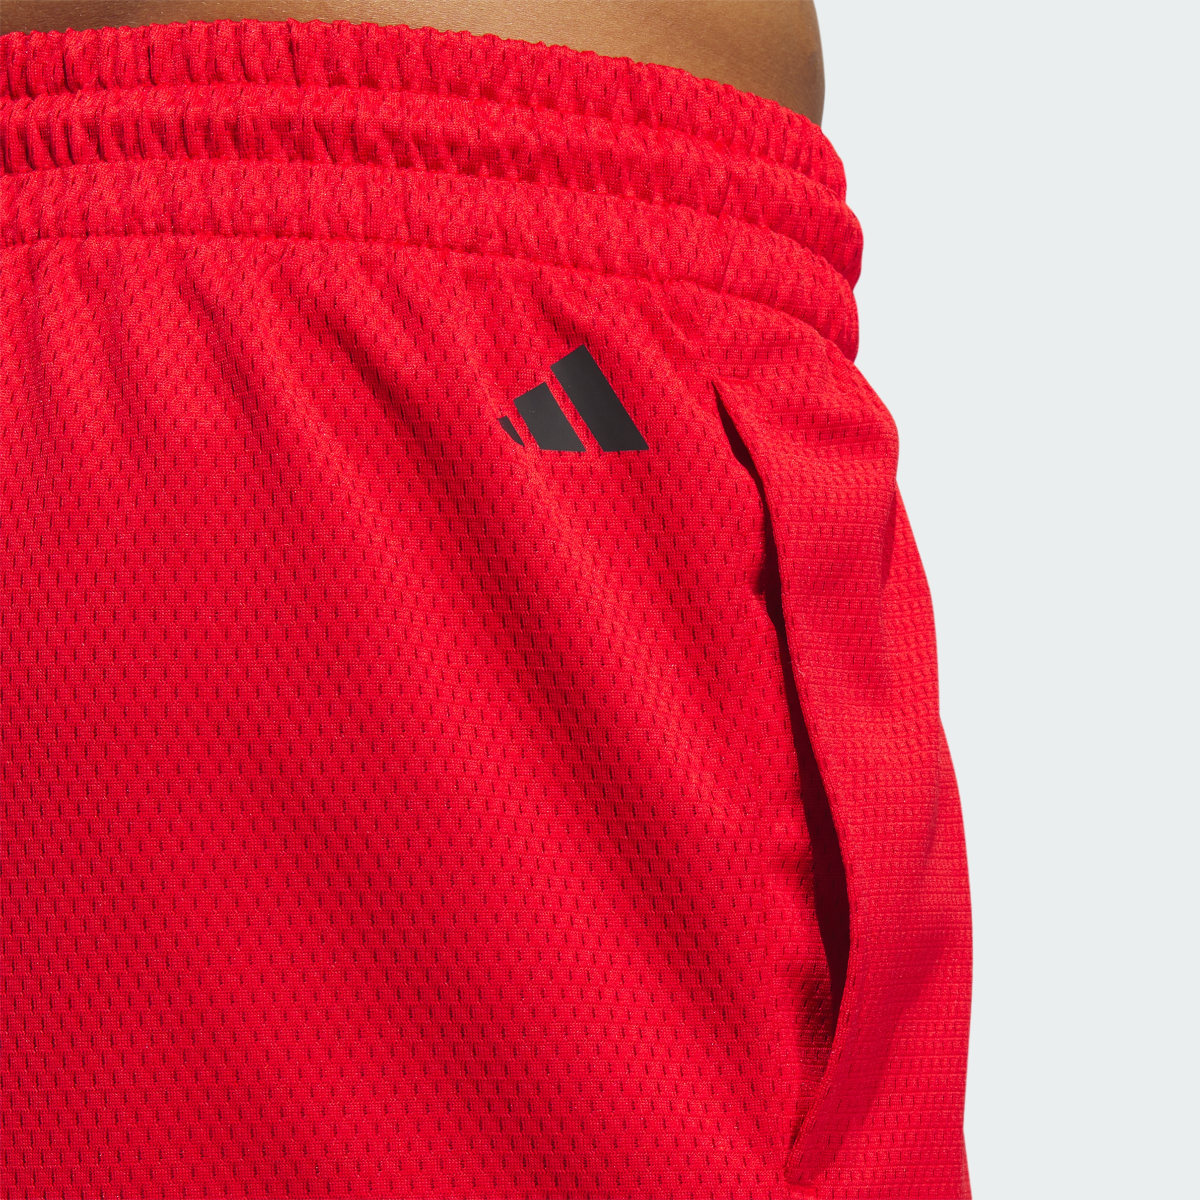 Adidas Legends Shorts. 6